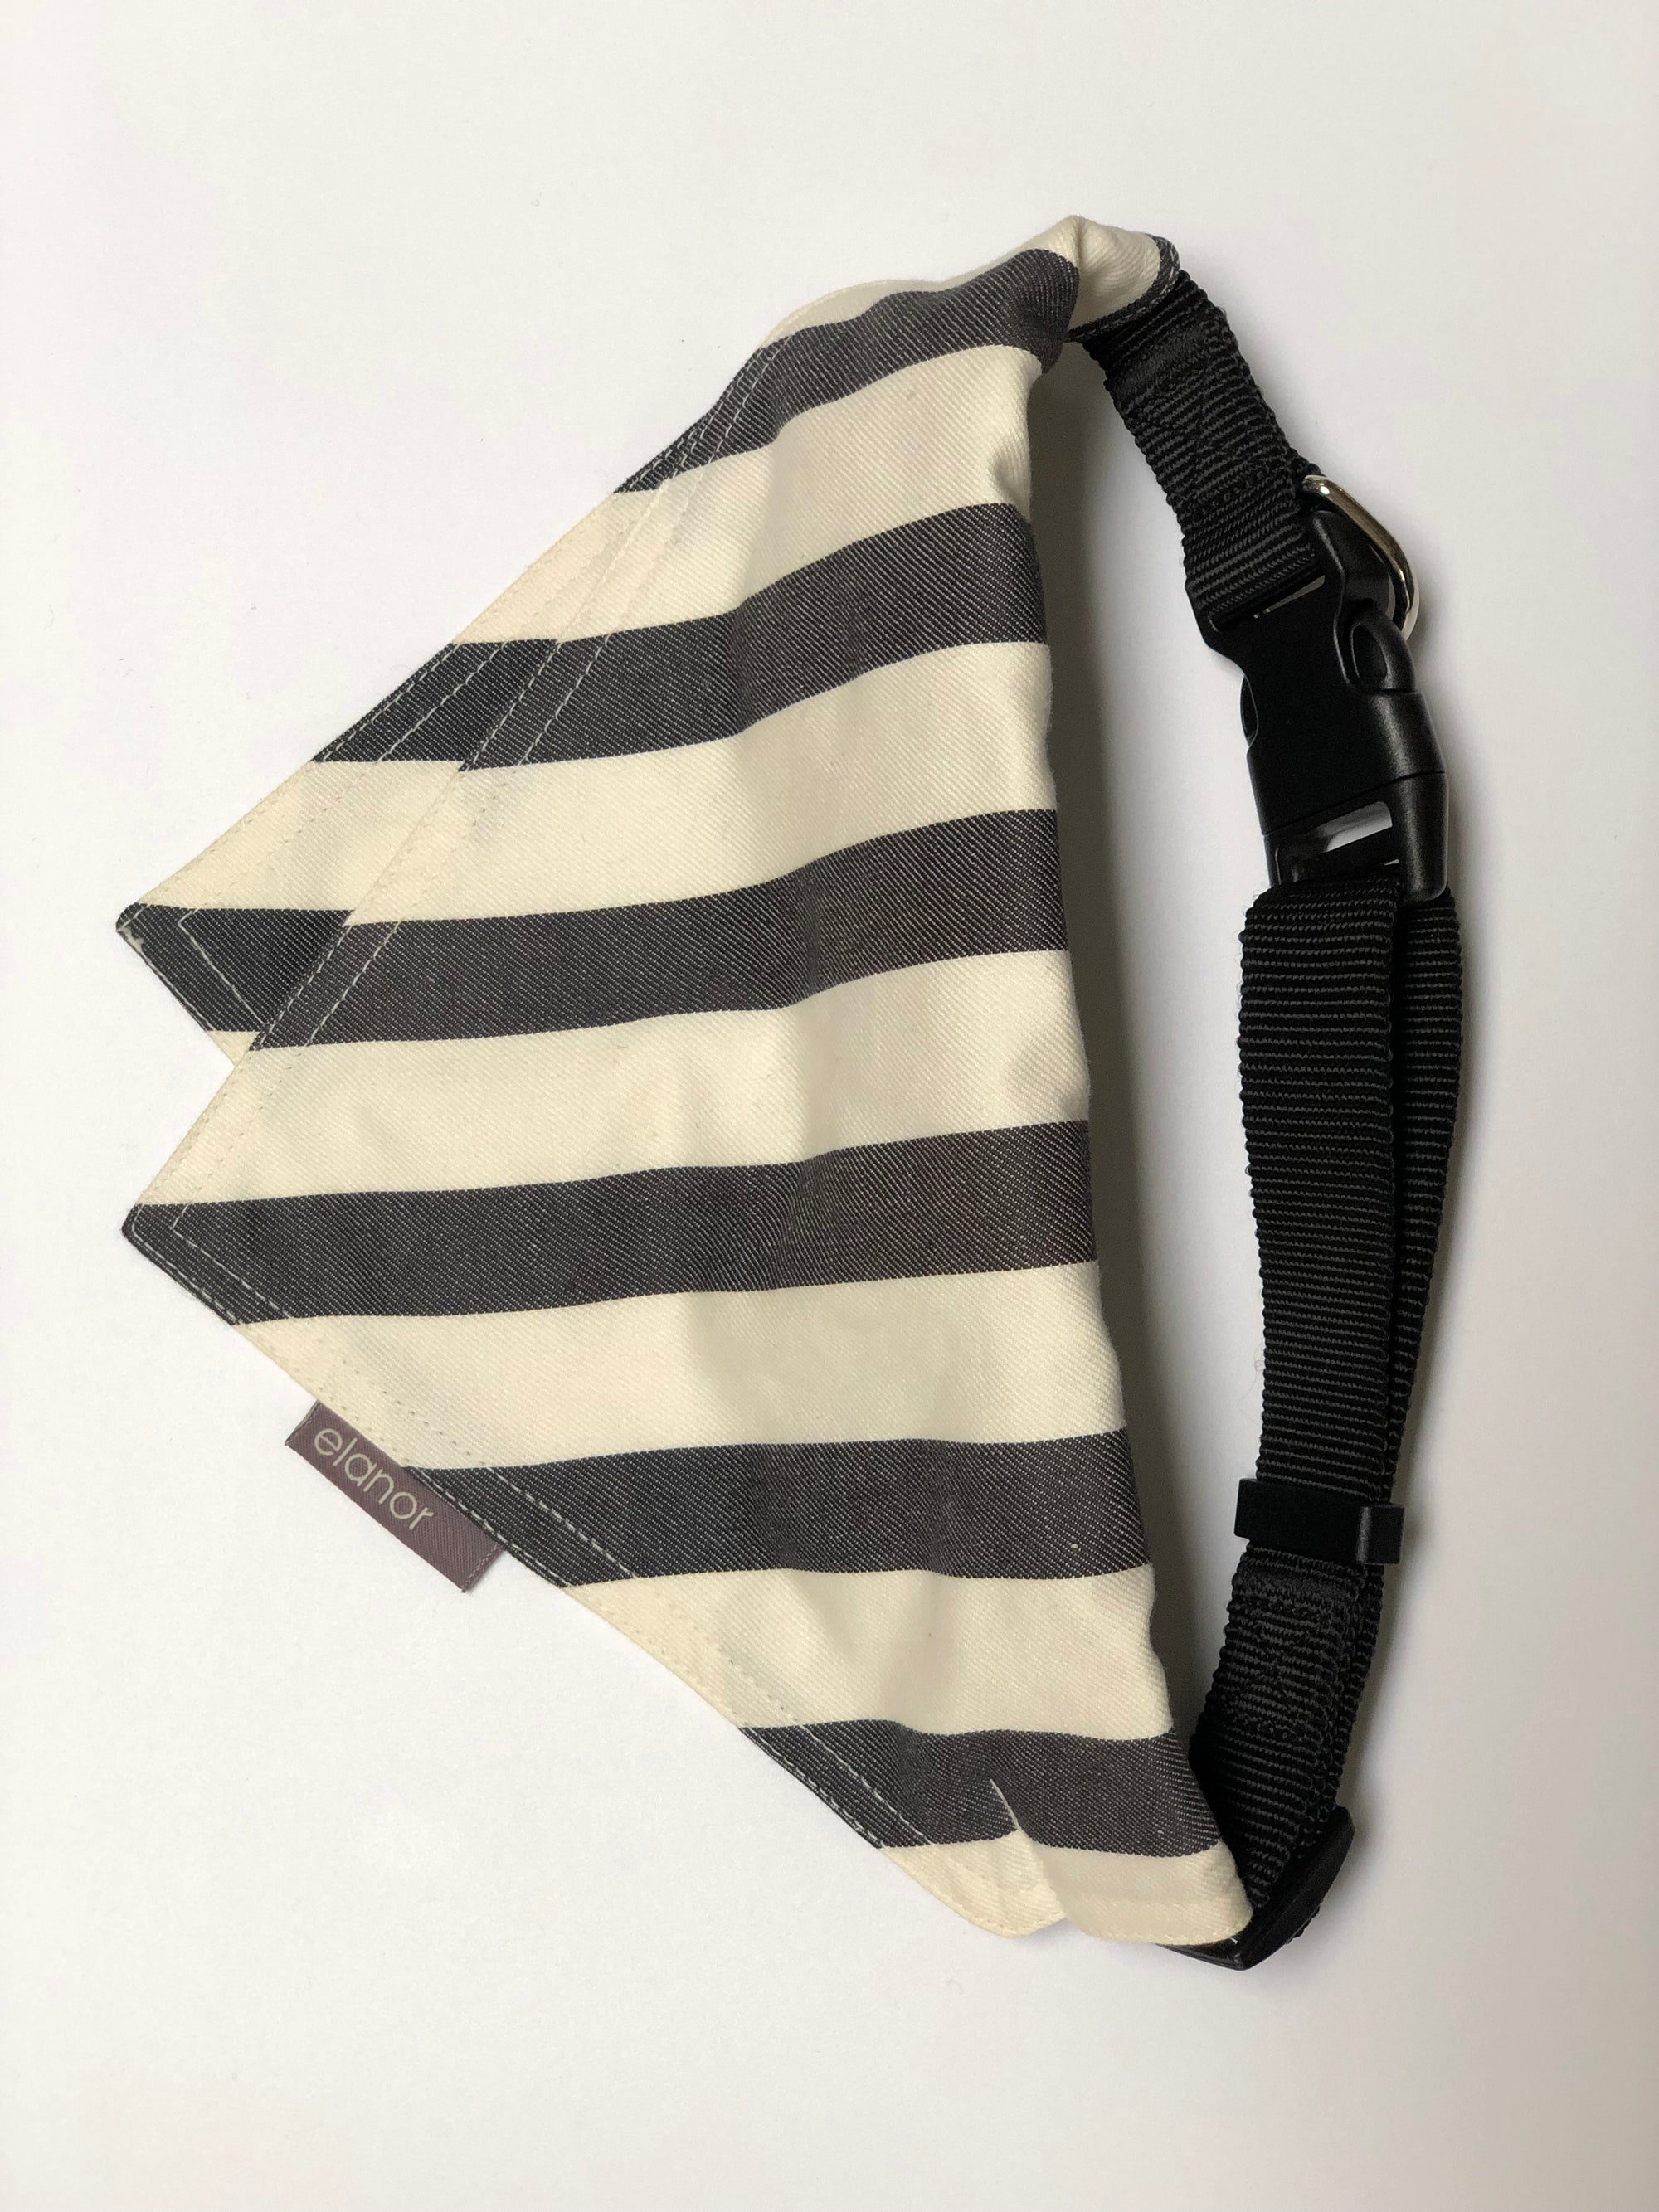 Elanor Collar Bandana - Spring Black & White Stripes (L/XL)